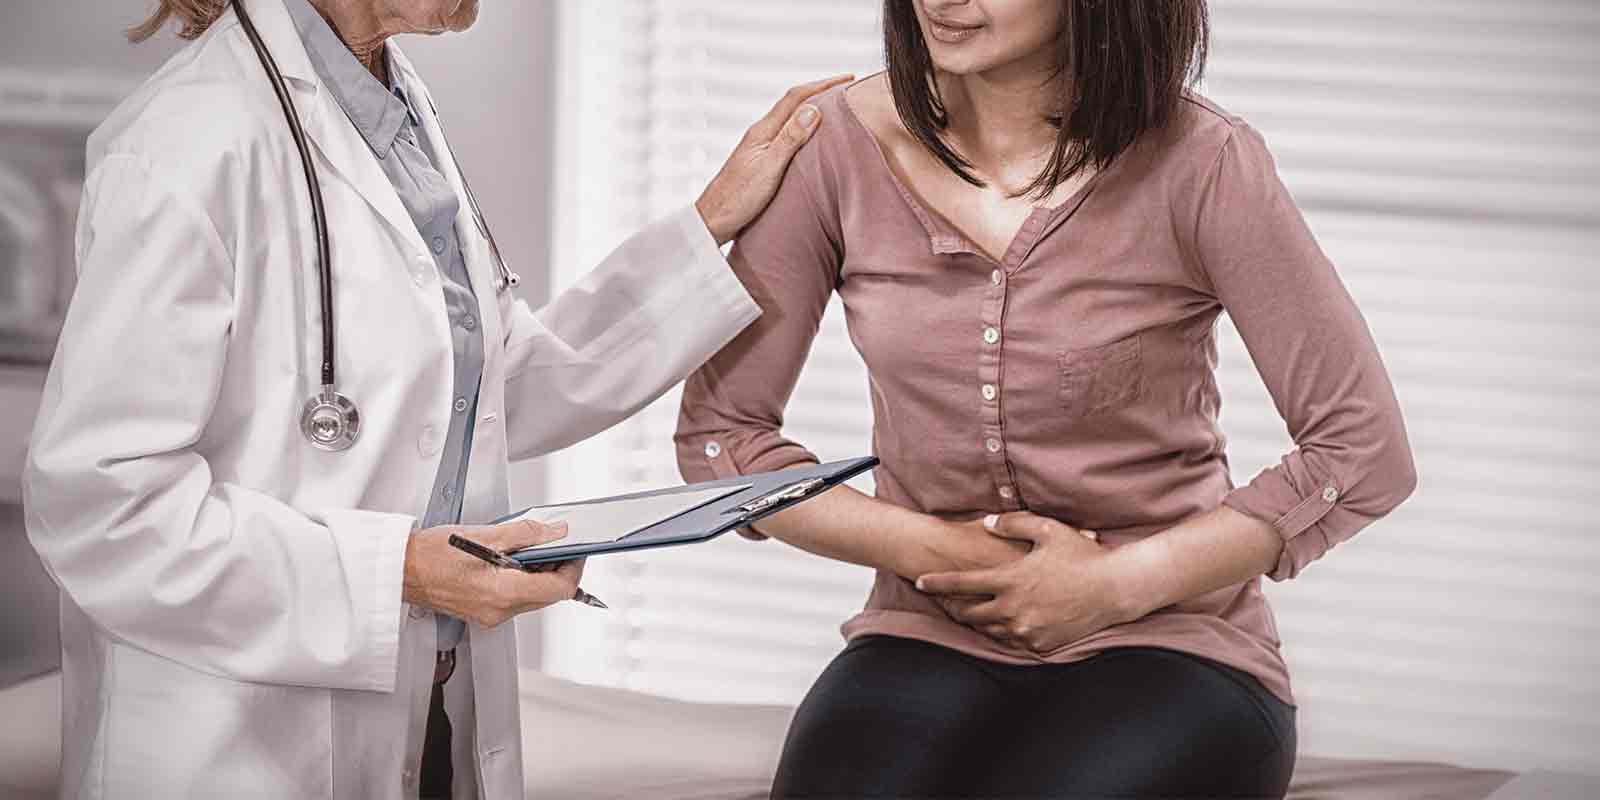 women in pain after a Endometrial Biopsy